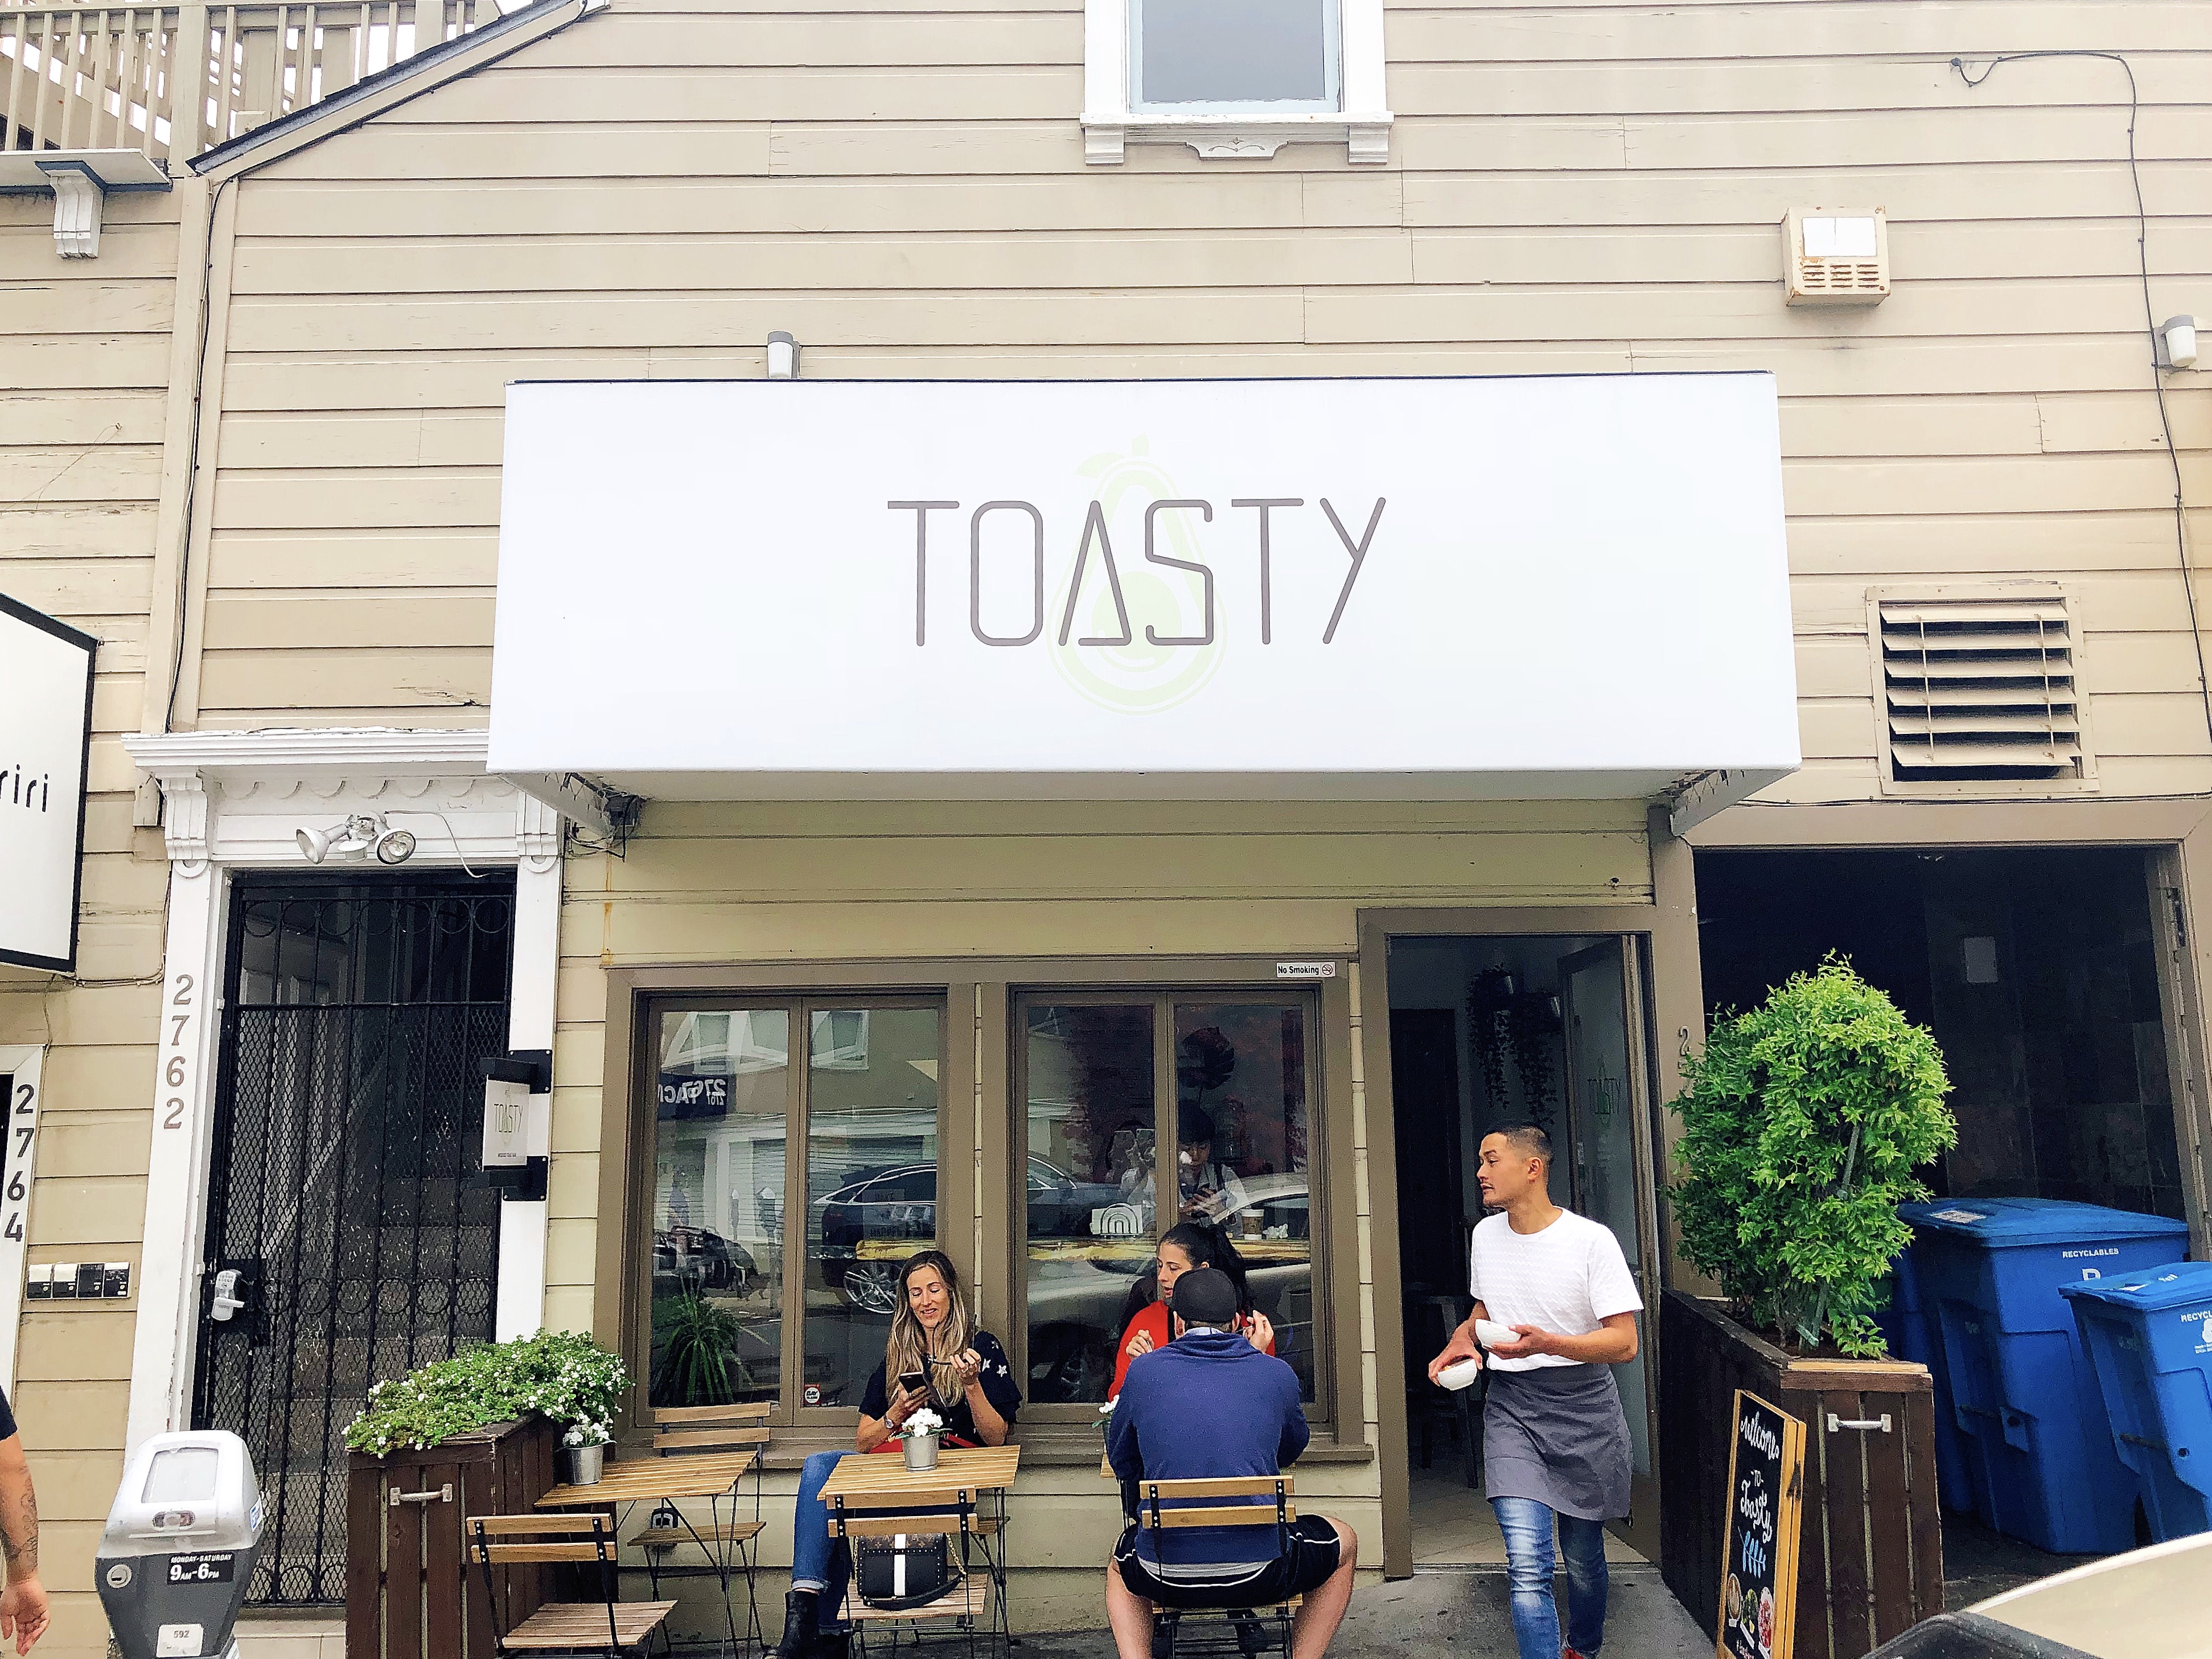 Get Toasty